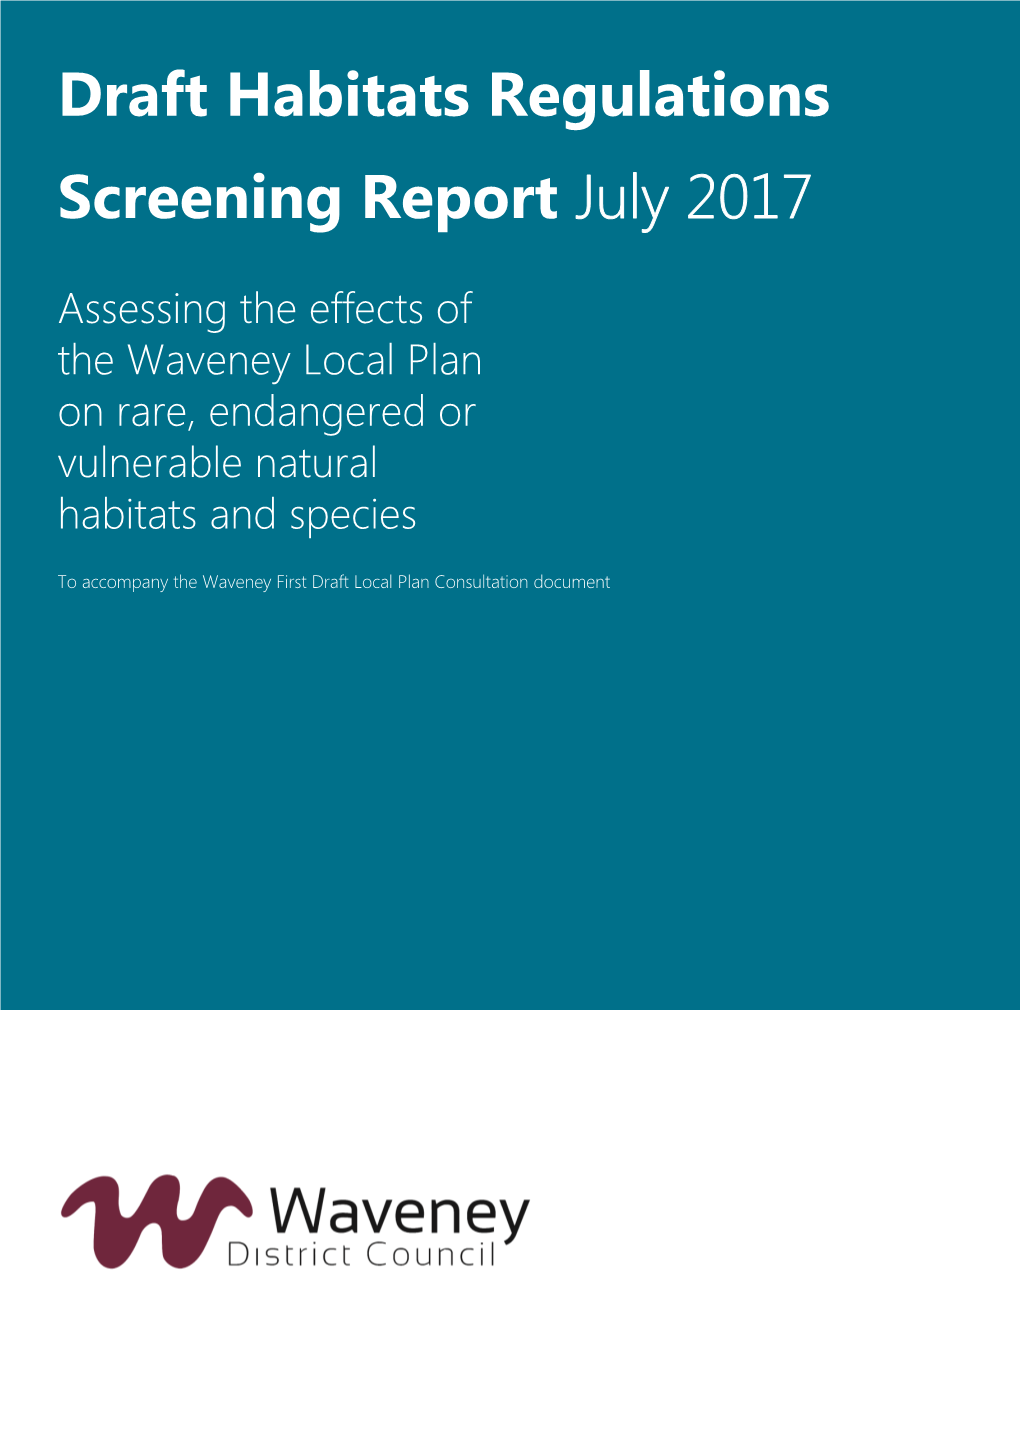 Draft Habitats Regulations Screening Report July 2017